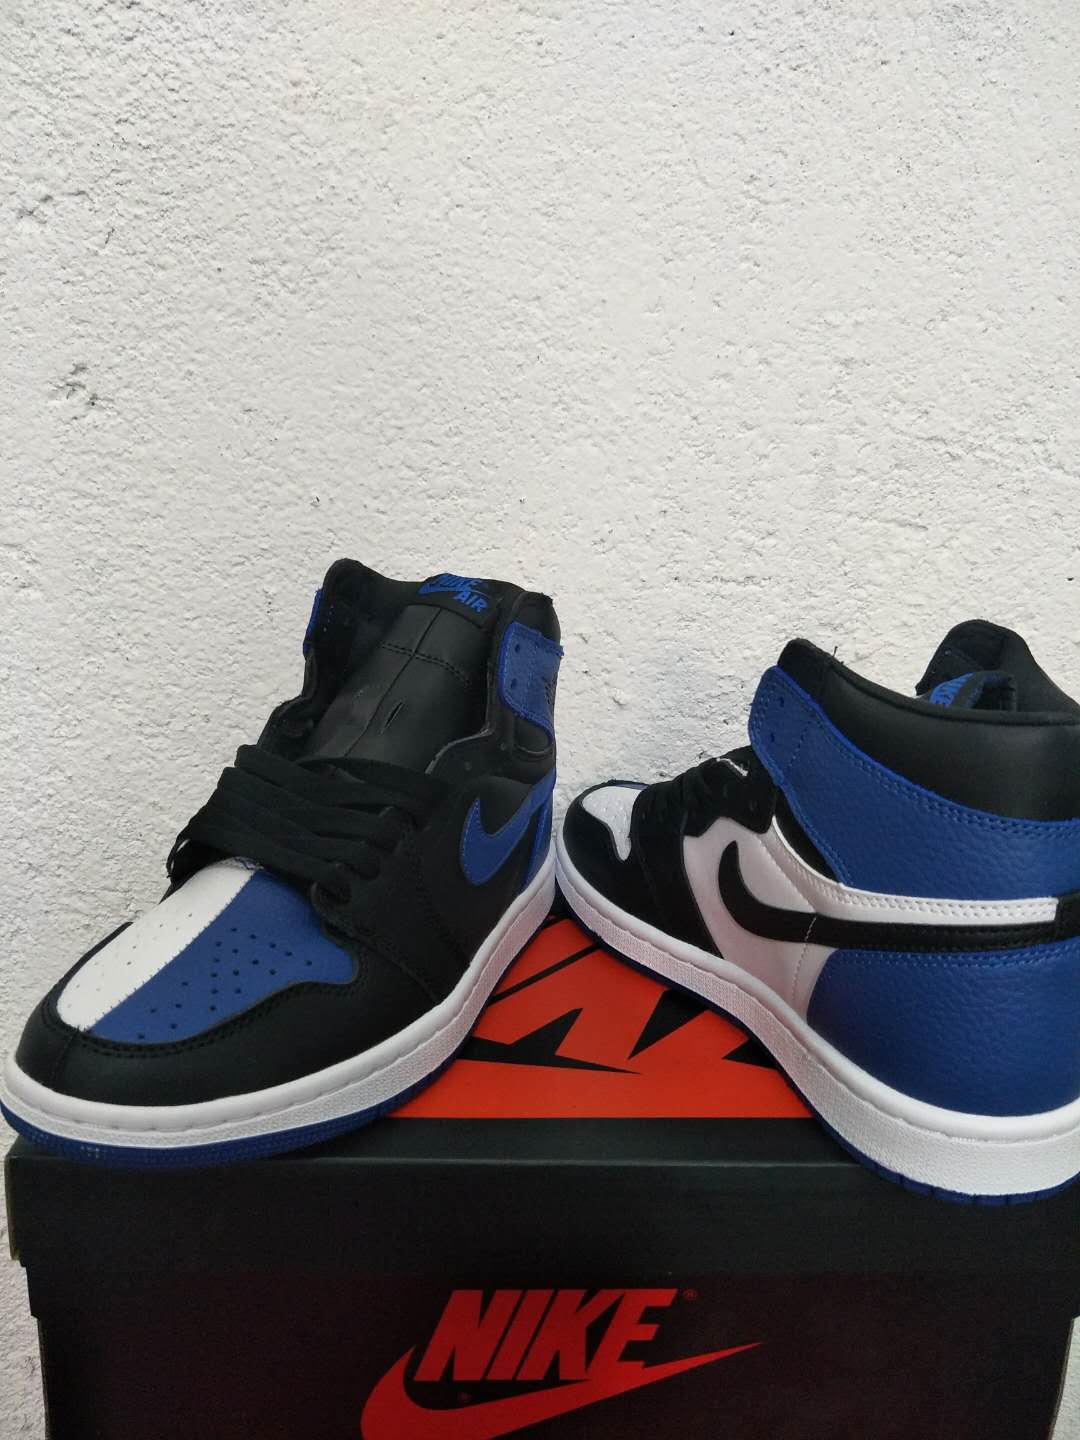 New Air Jordan 1 Clown Blue Black White Shoes - Click Image to Close